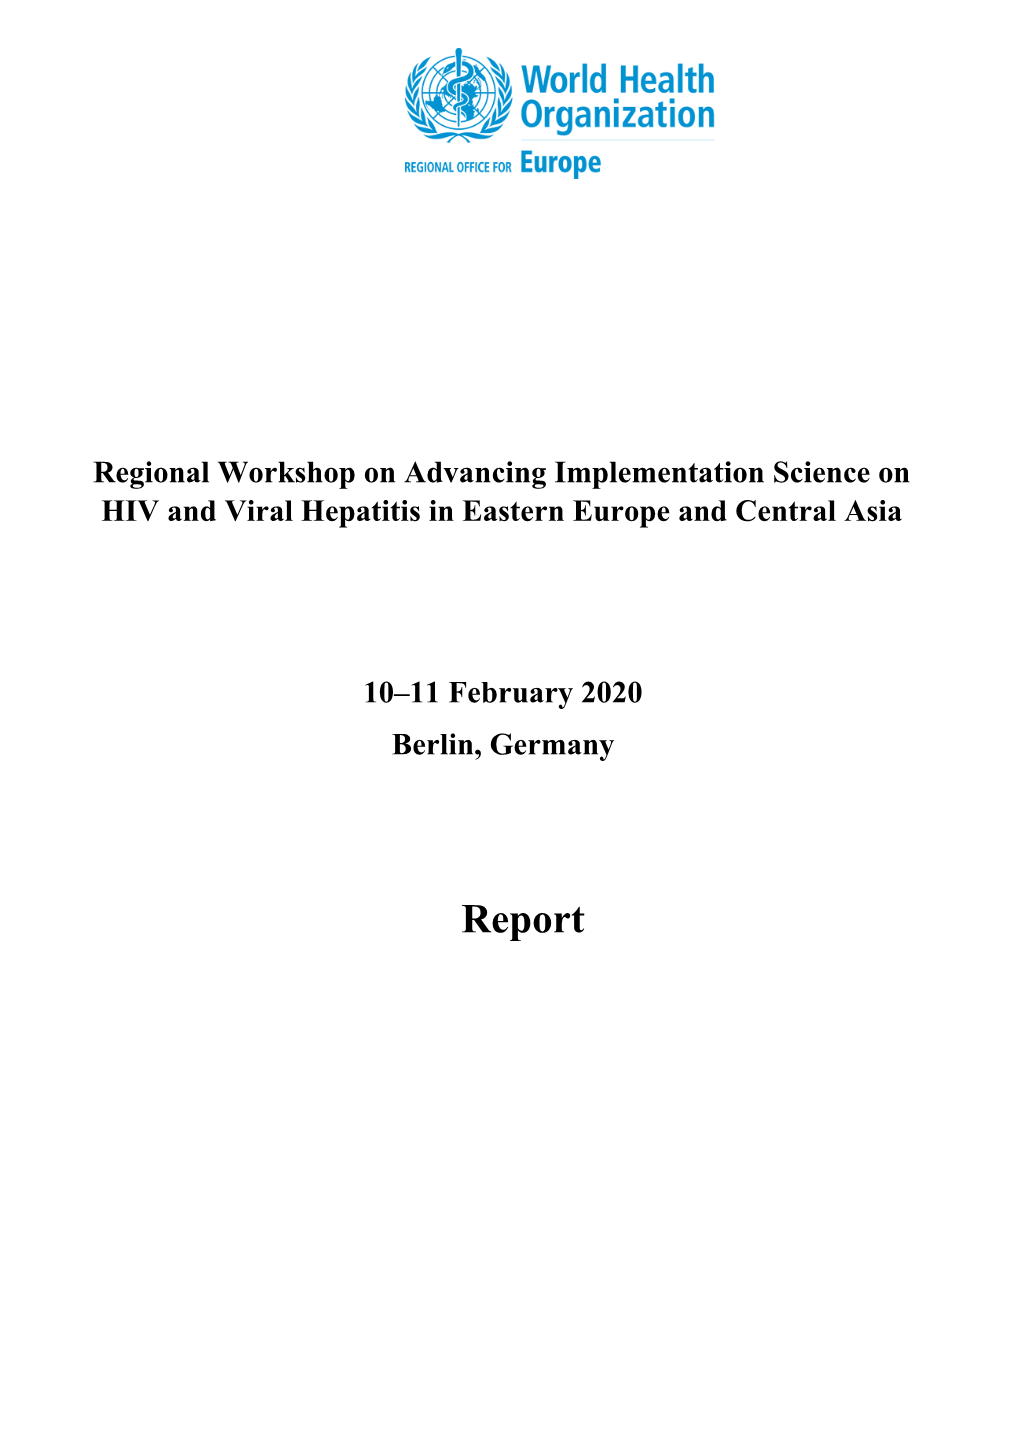 Report-Regional-Workshop-On-HIV